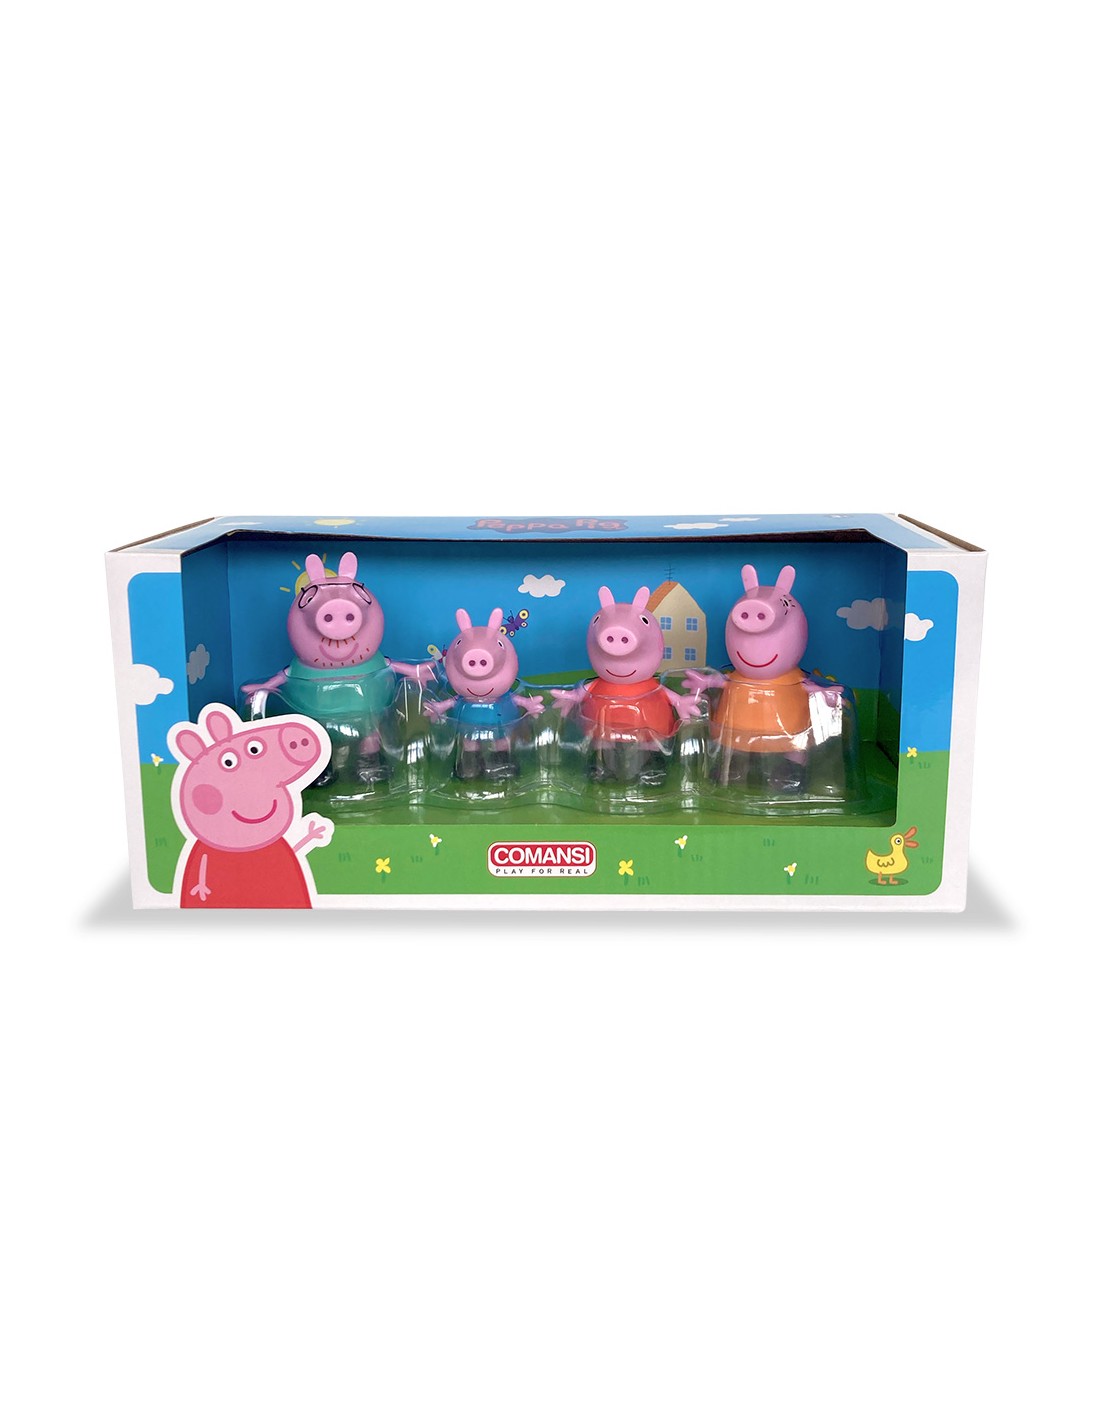 Peppa Pig Peppa y Familia Set 4 Figuras